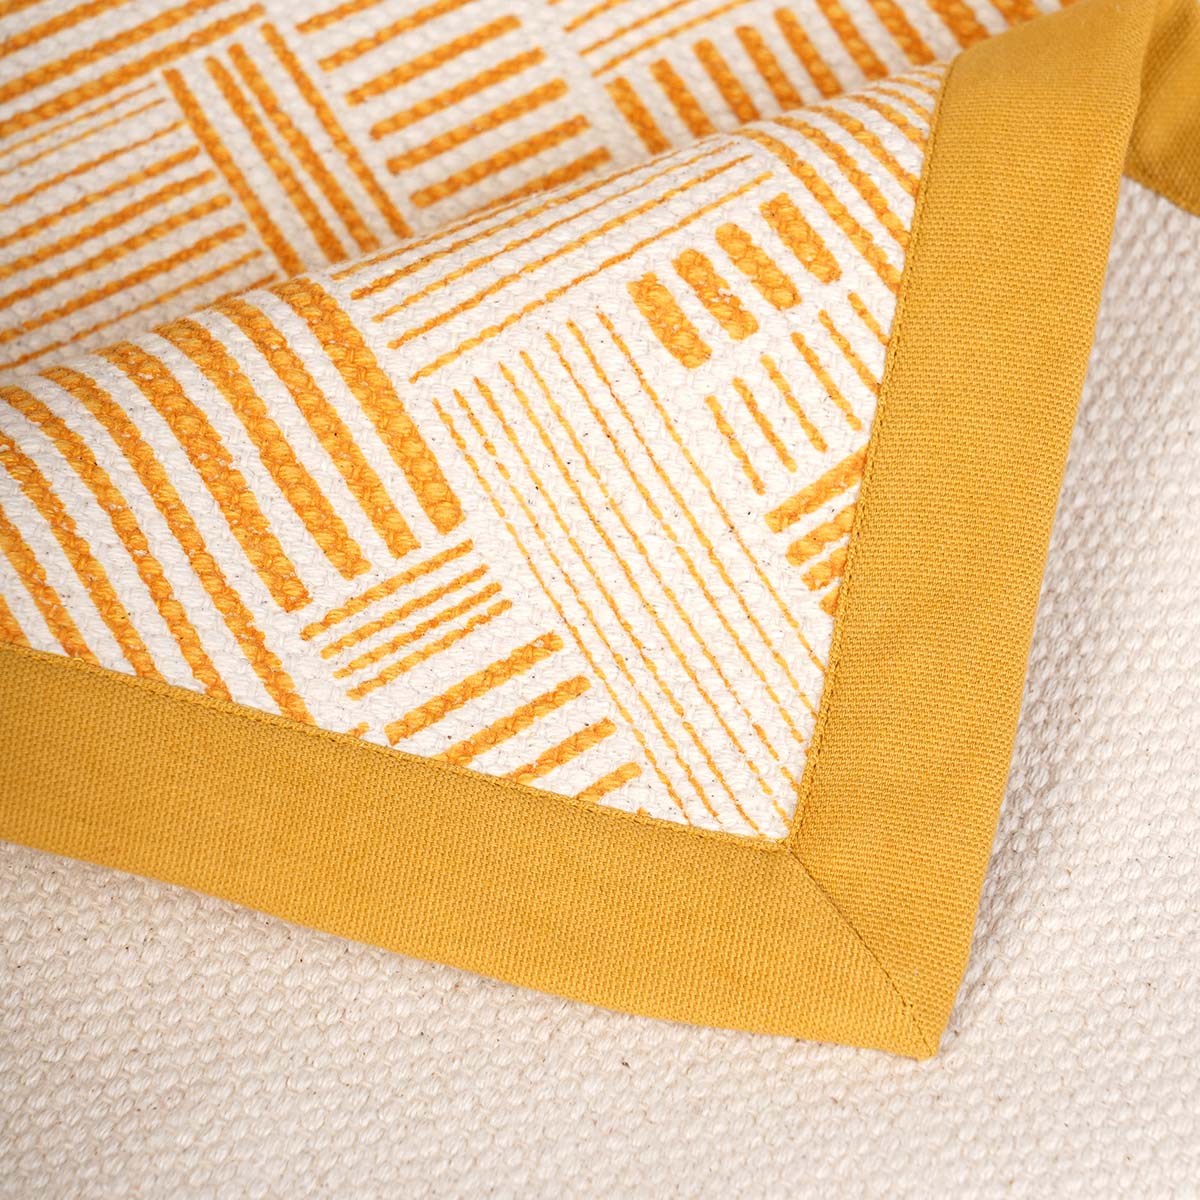 MODERN RETRO - Mustard yellow cotton rug, stripe print, mid century modern, sizes available